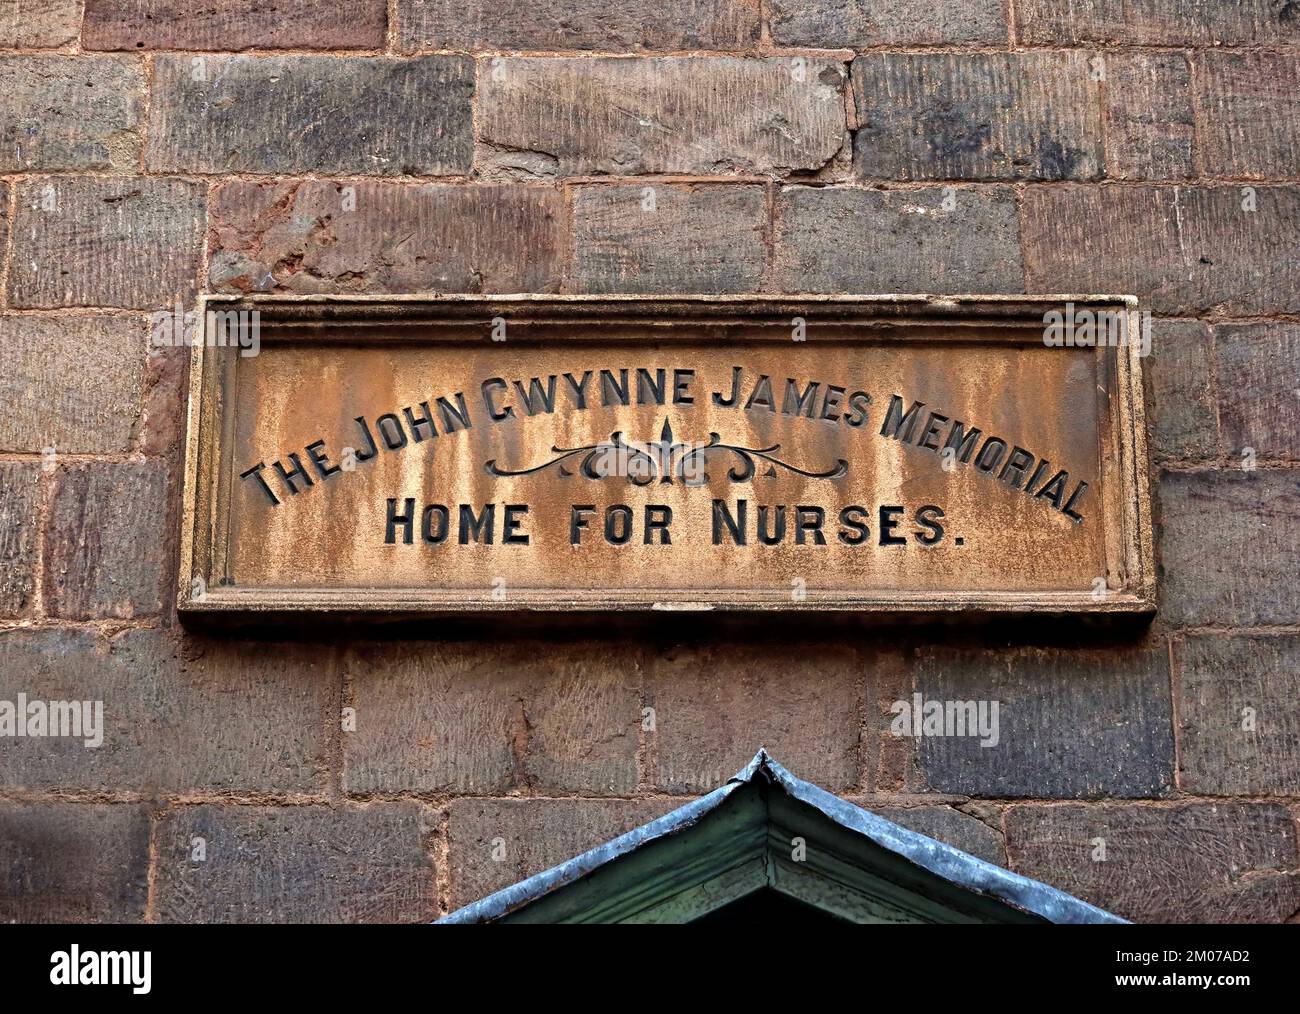 The John Gwynne James, memorial home, for nurses, 33 Bridge Street, Hereford, Herefordshire, England, UK, HR4 9DG Stock Photo